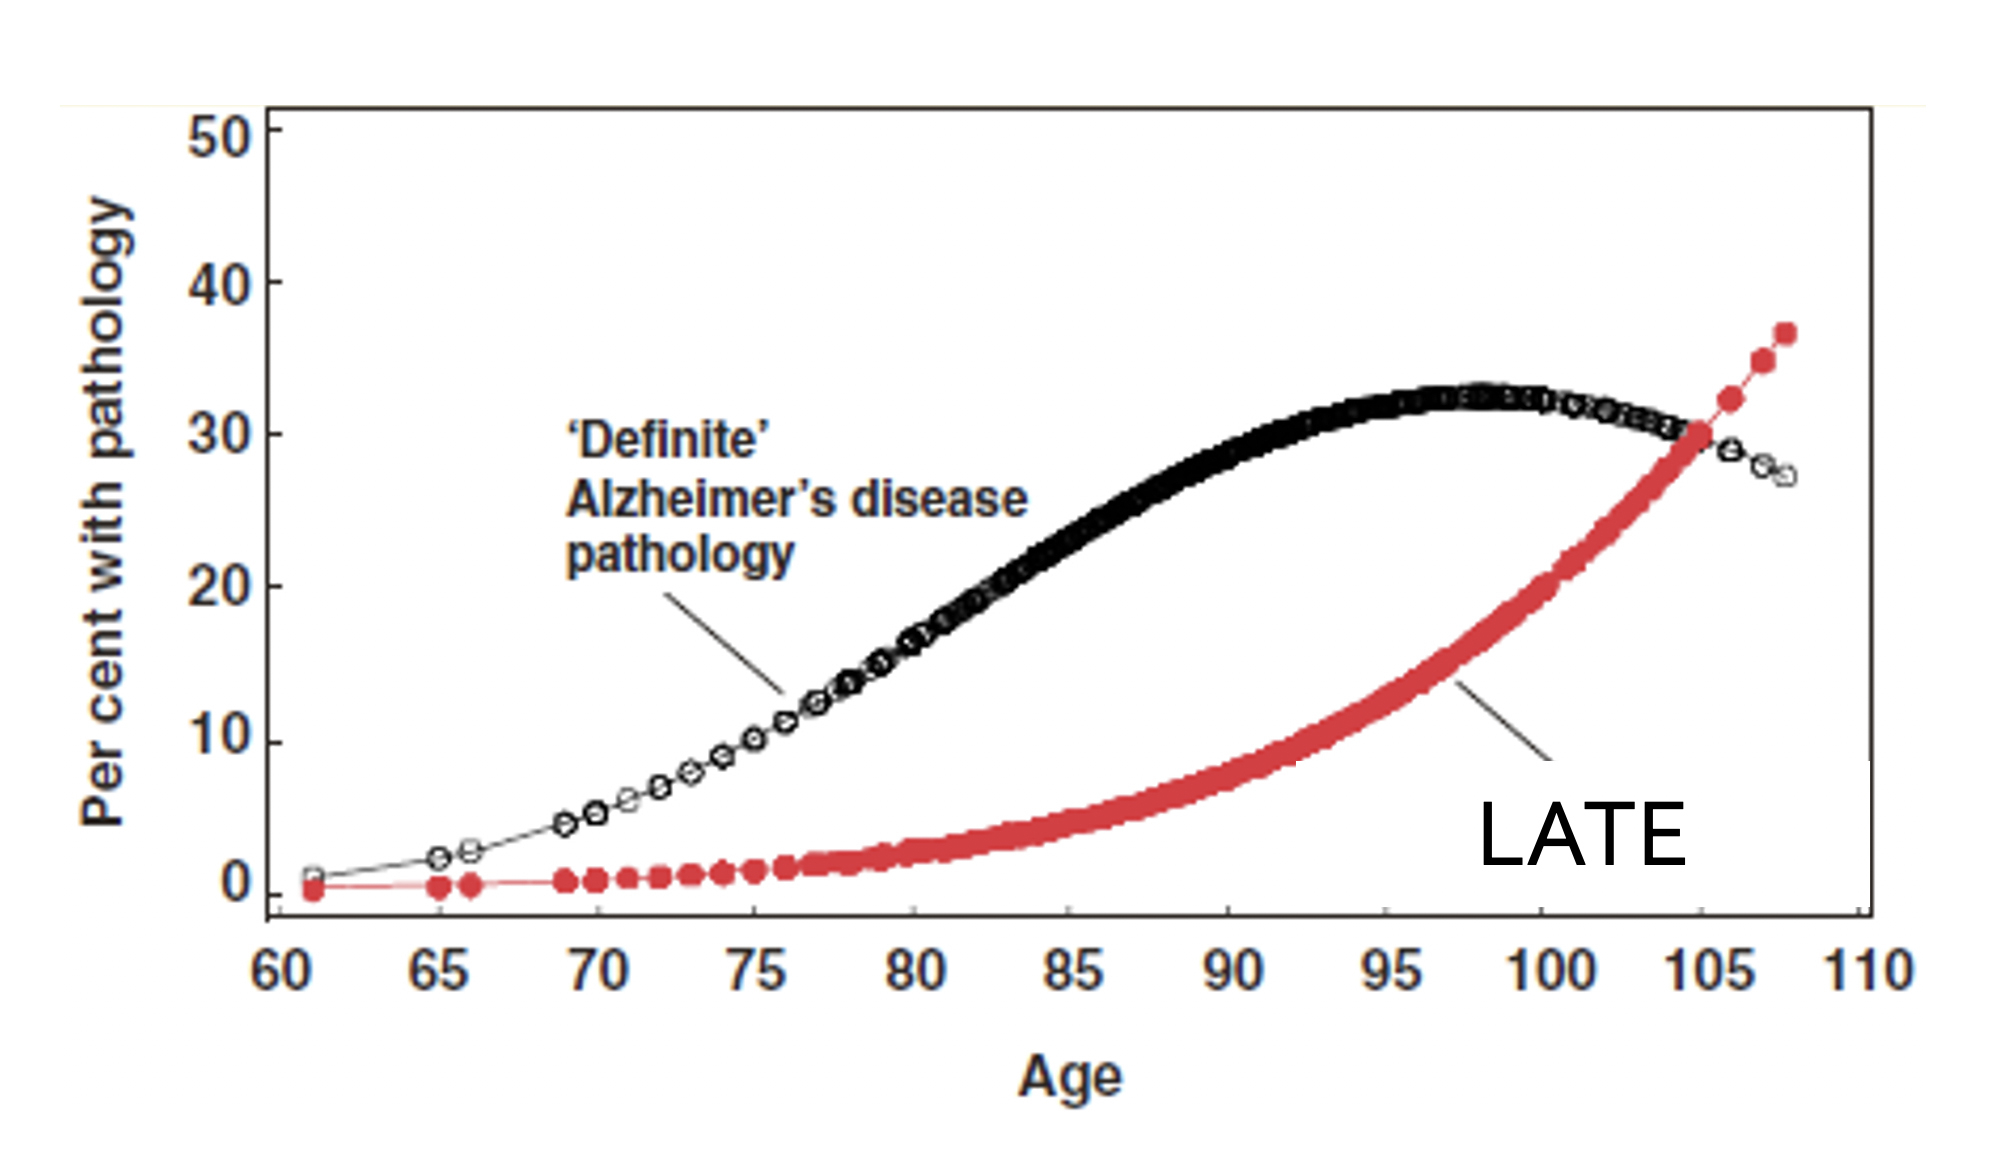 LATE Percent with Pathology